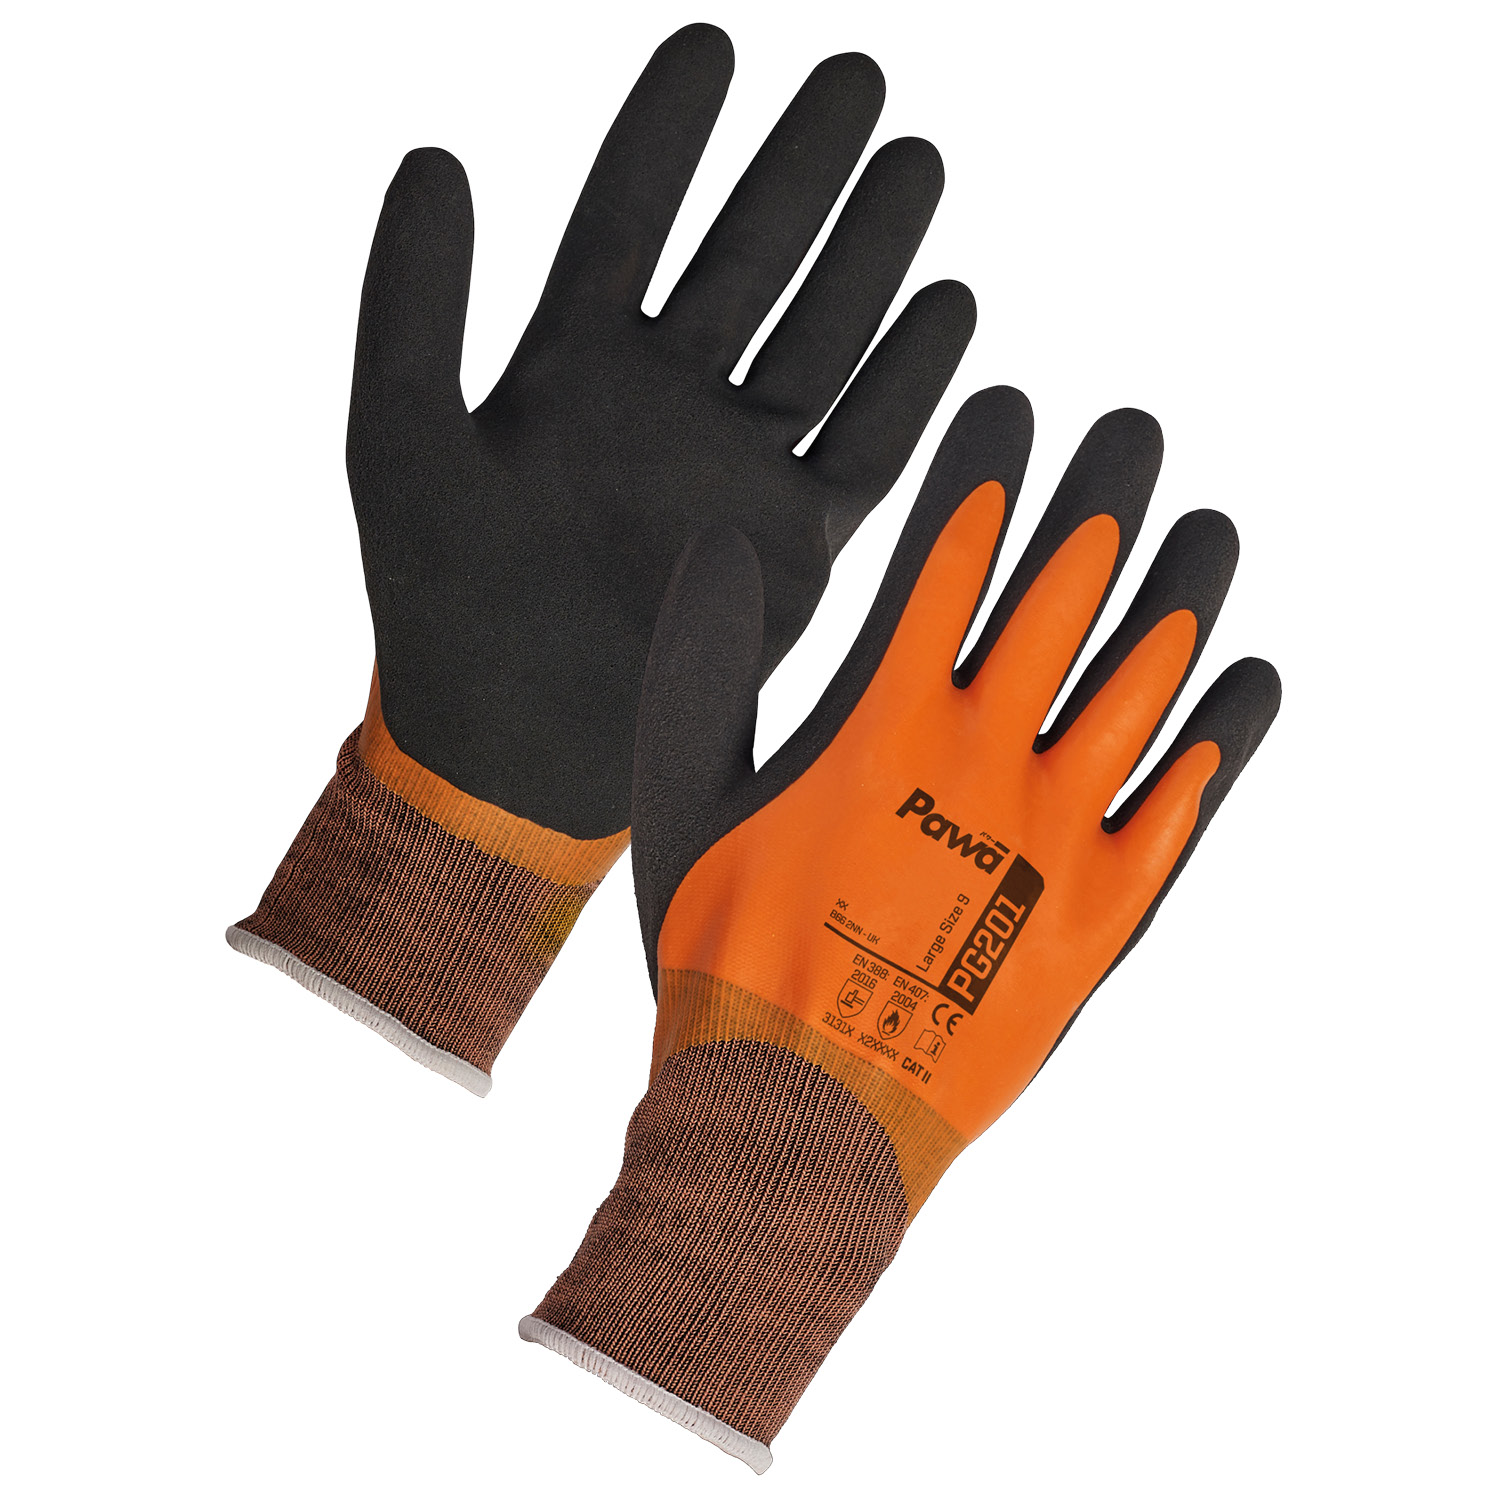 Pawa Gloves 201 - Medium